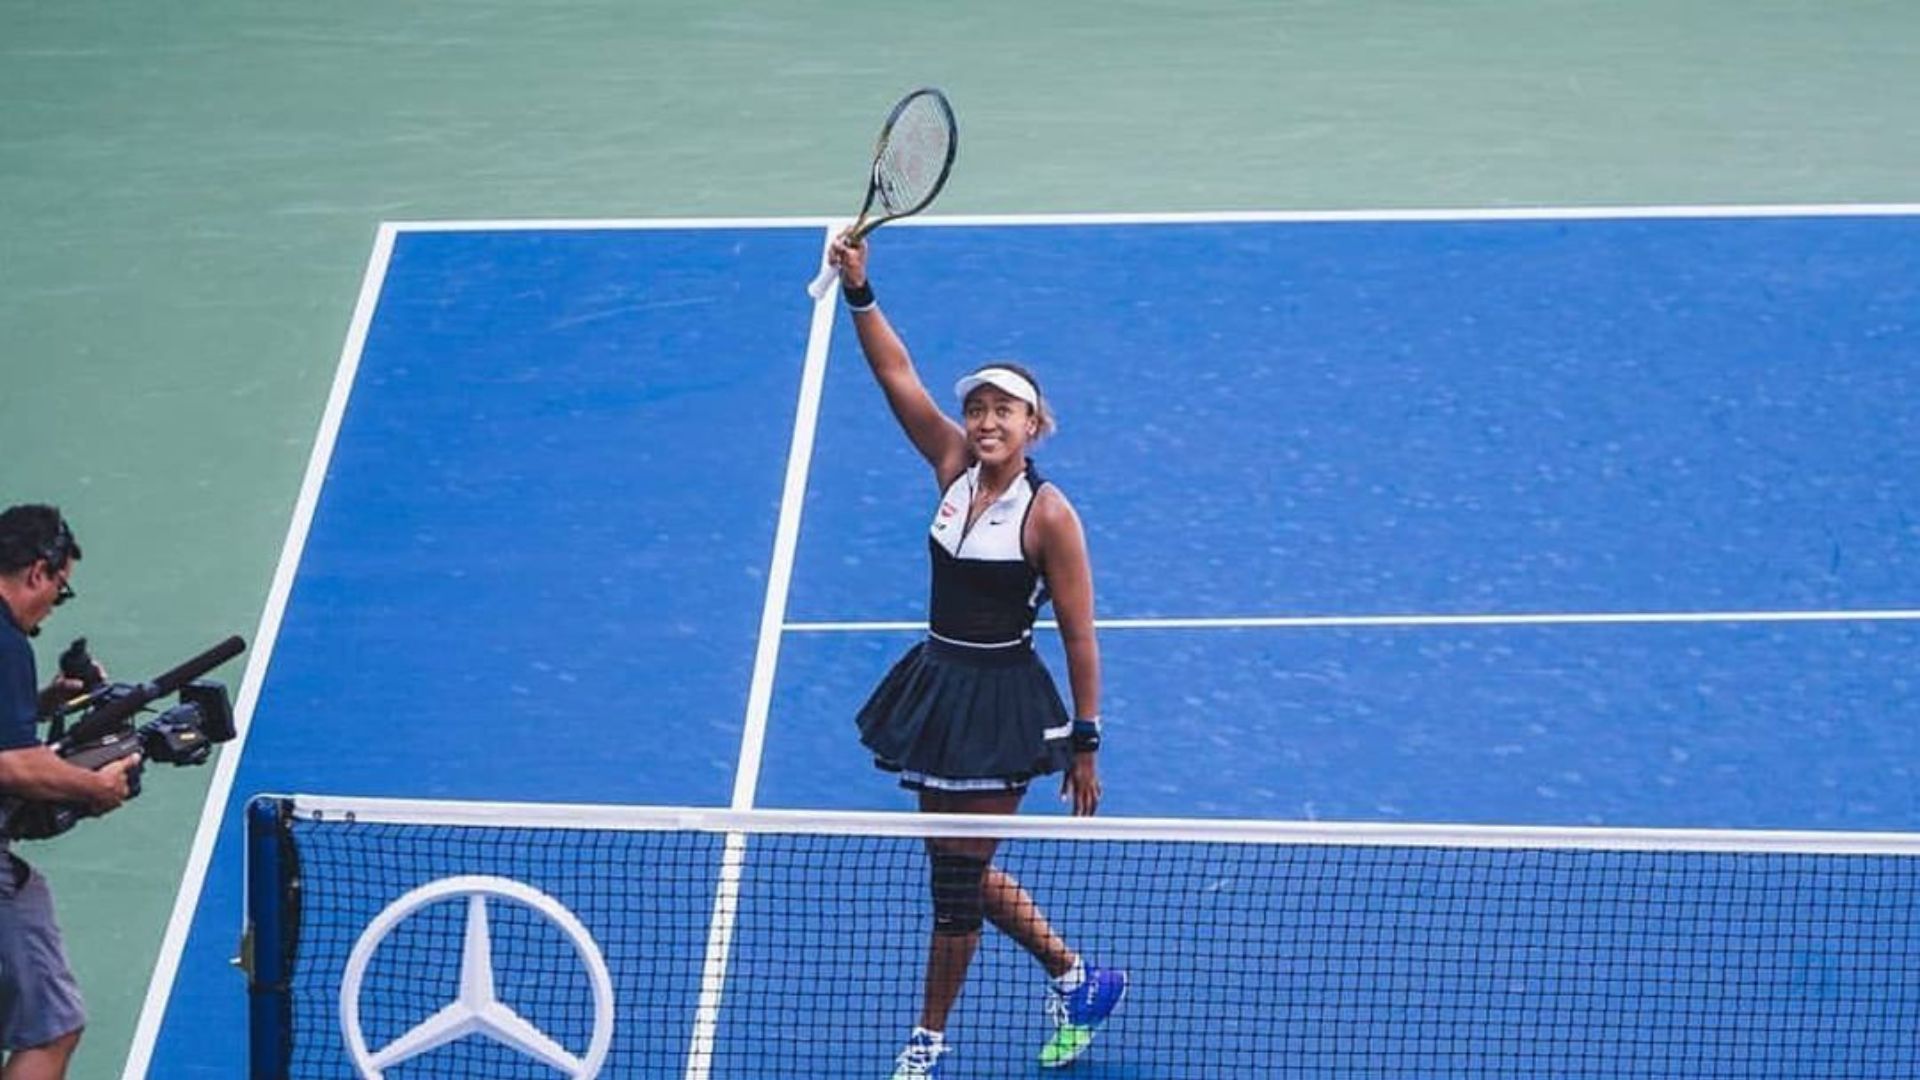 Naomi Osaka's Net Worth In 2023: The Pregnant Star Is On A Tennis Hiatus